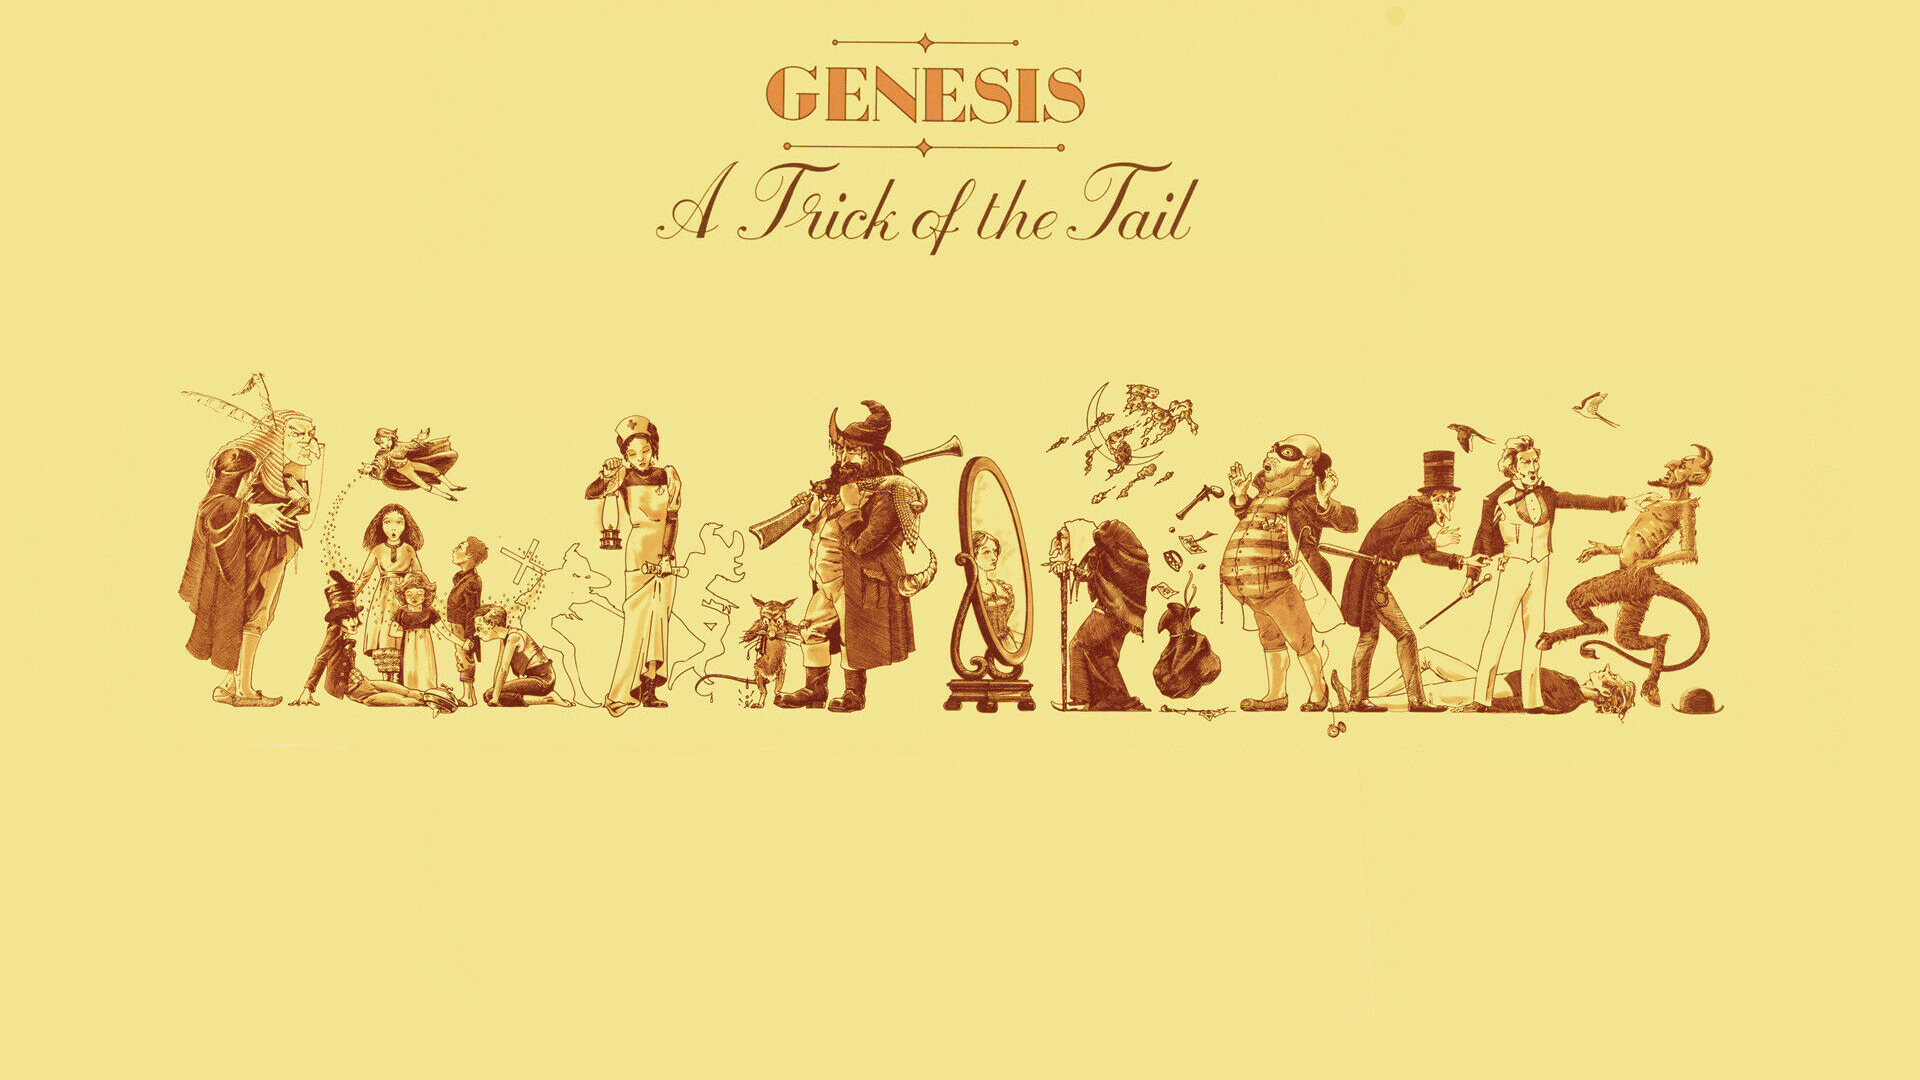 General 1920x1080 Genesis (band) album covers cover art progressive rock classic rock 1970s 1976 (Year) genesis simple background yellow background minimalism demon devil Robbery